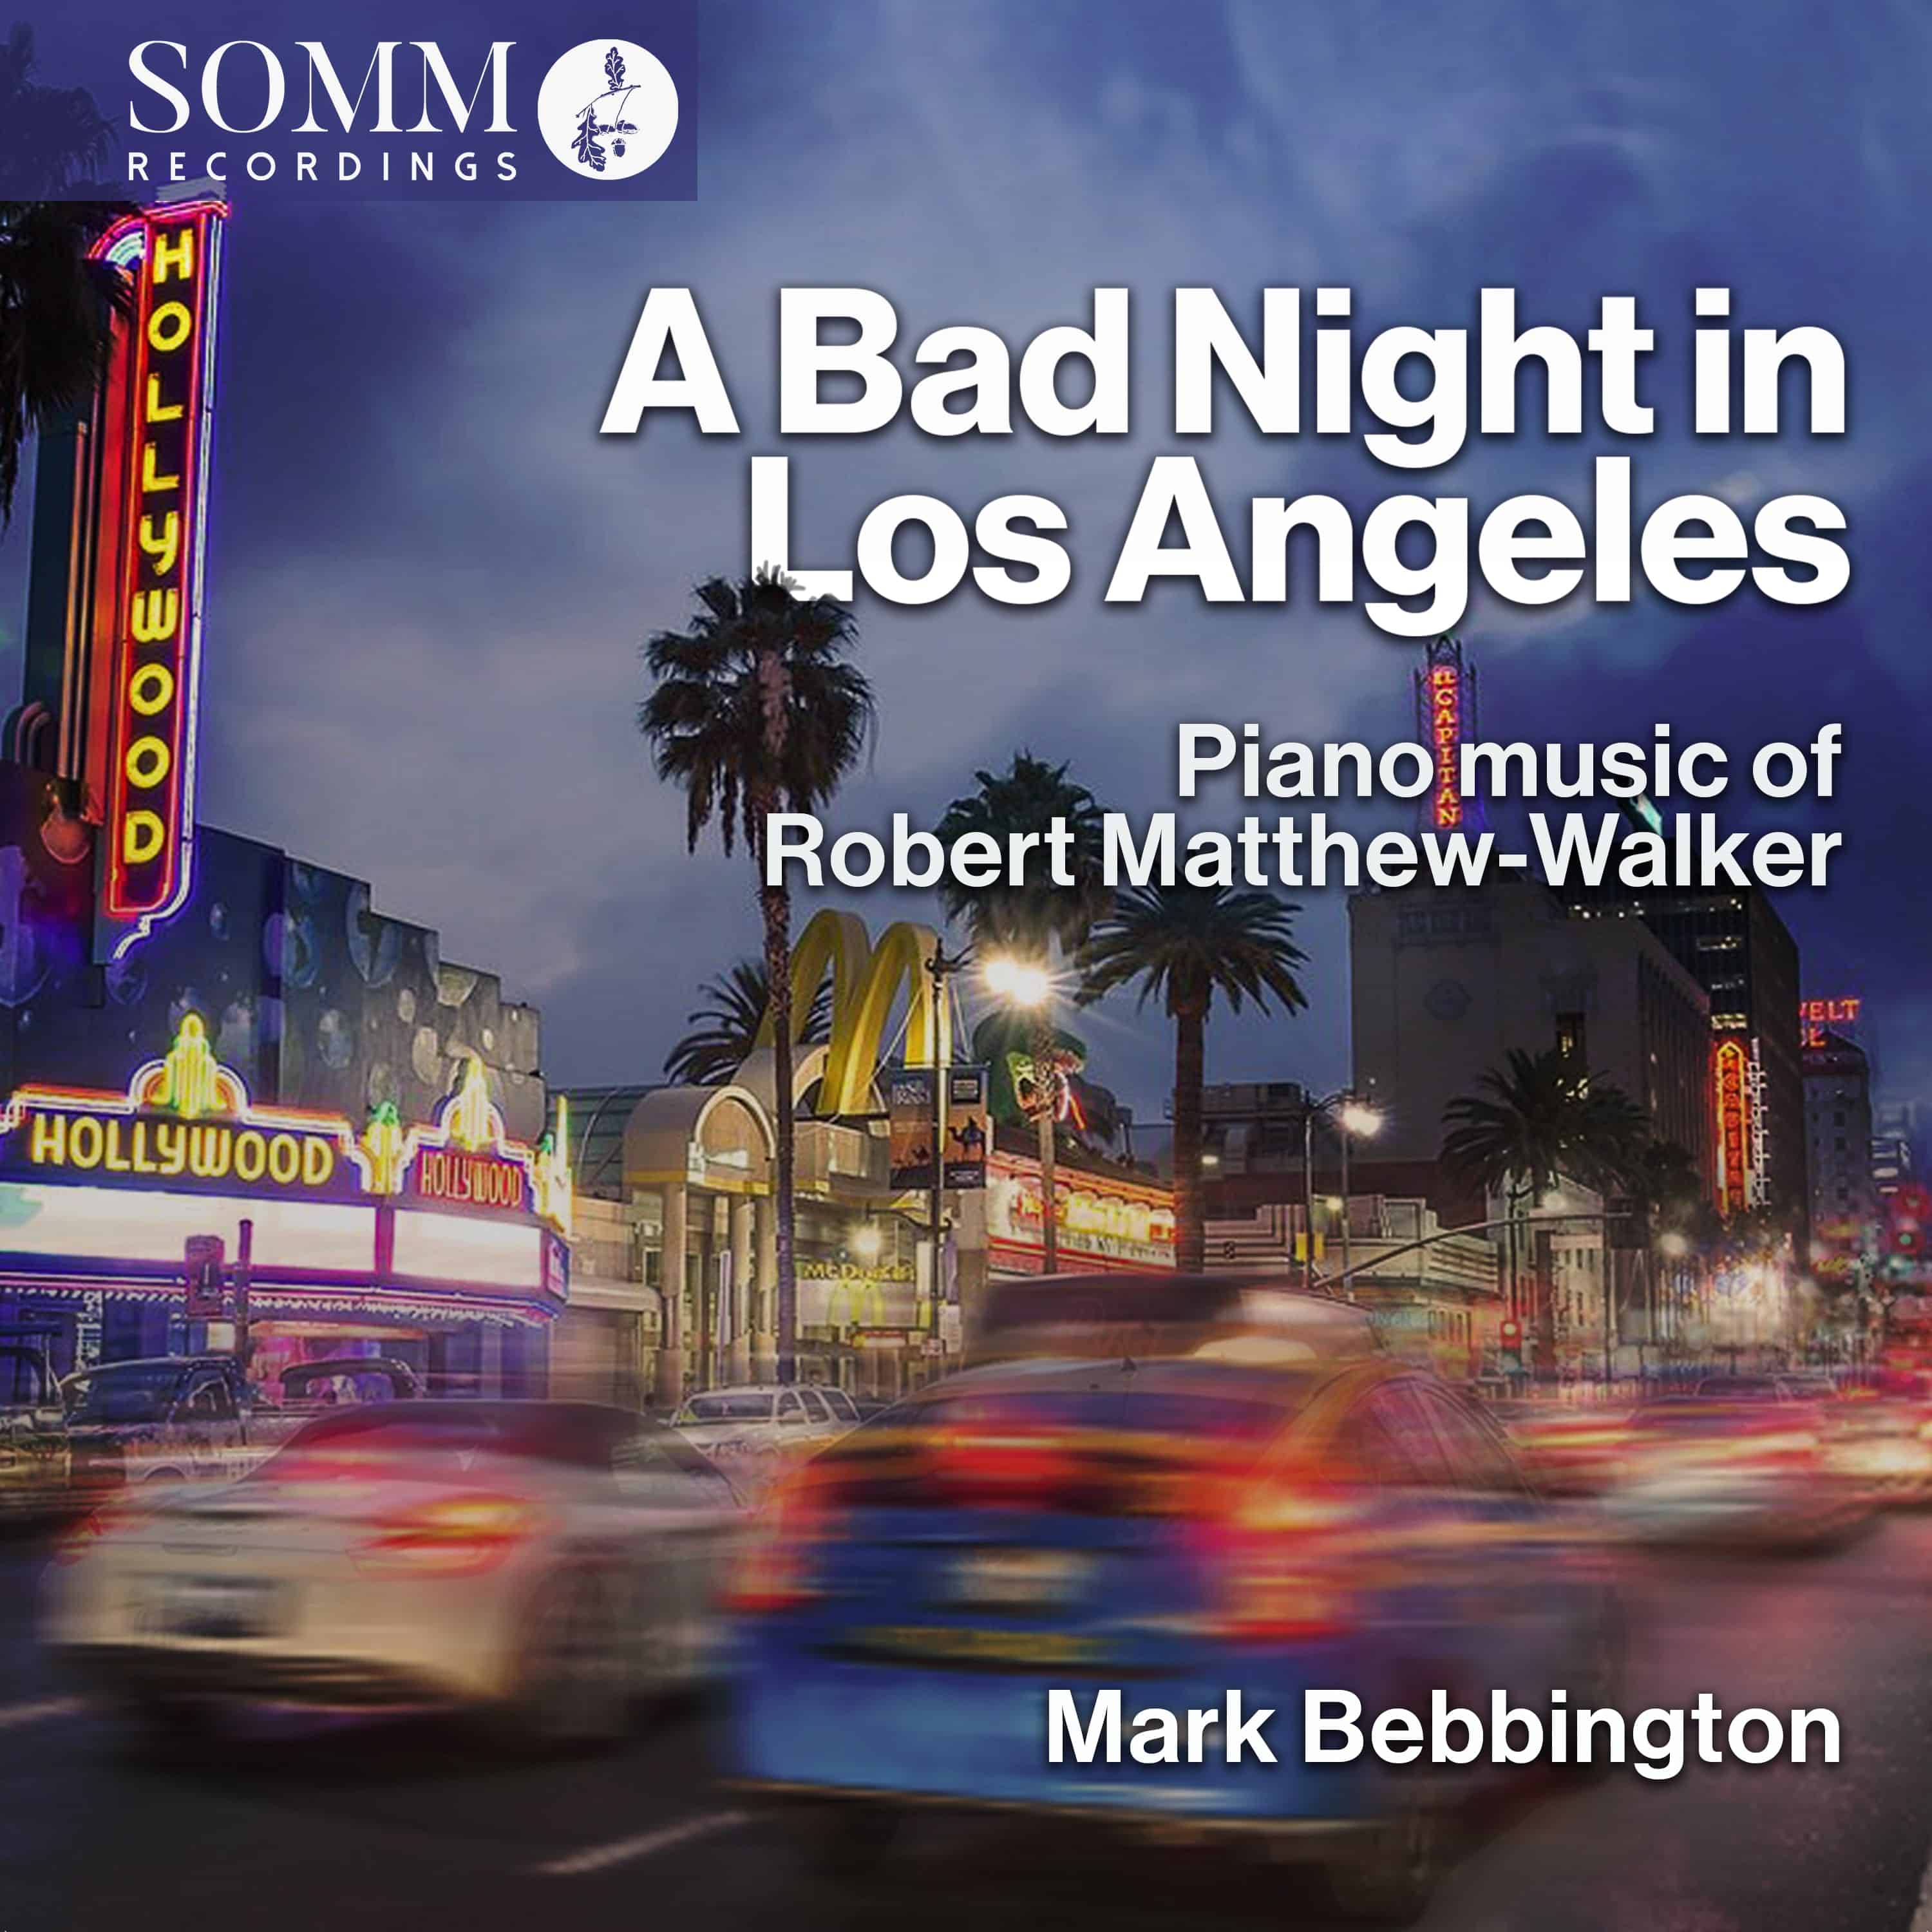 Review of MATTHEW-WALKER A Bad Night in Los Angeles